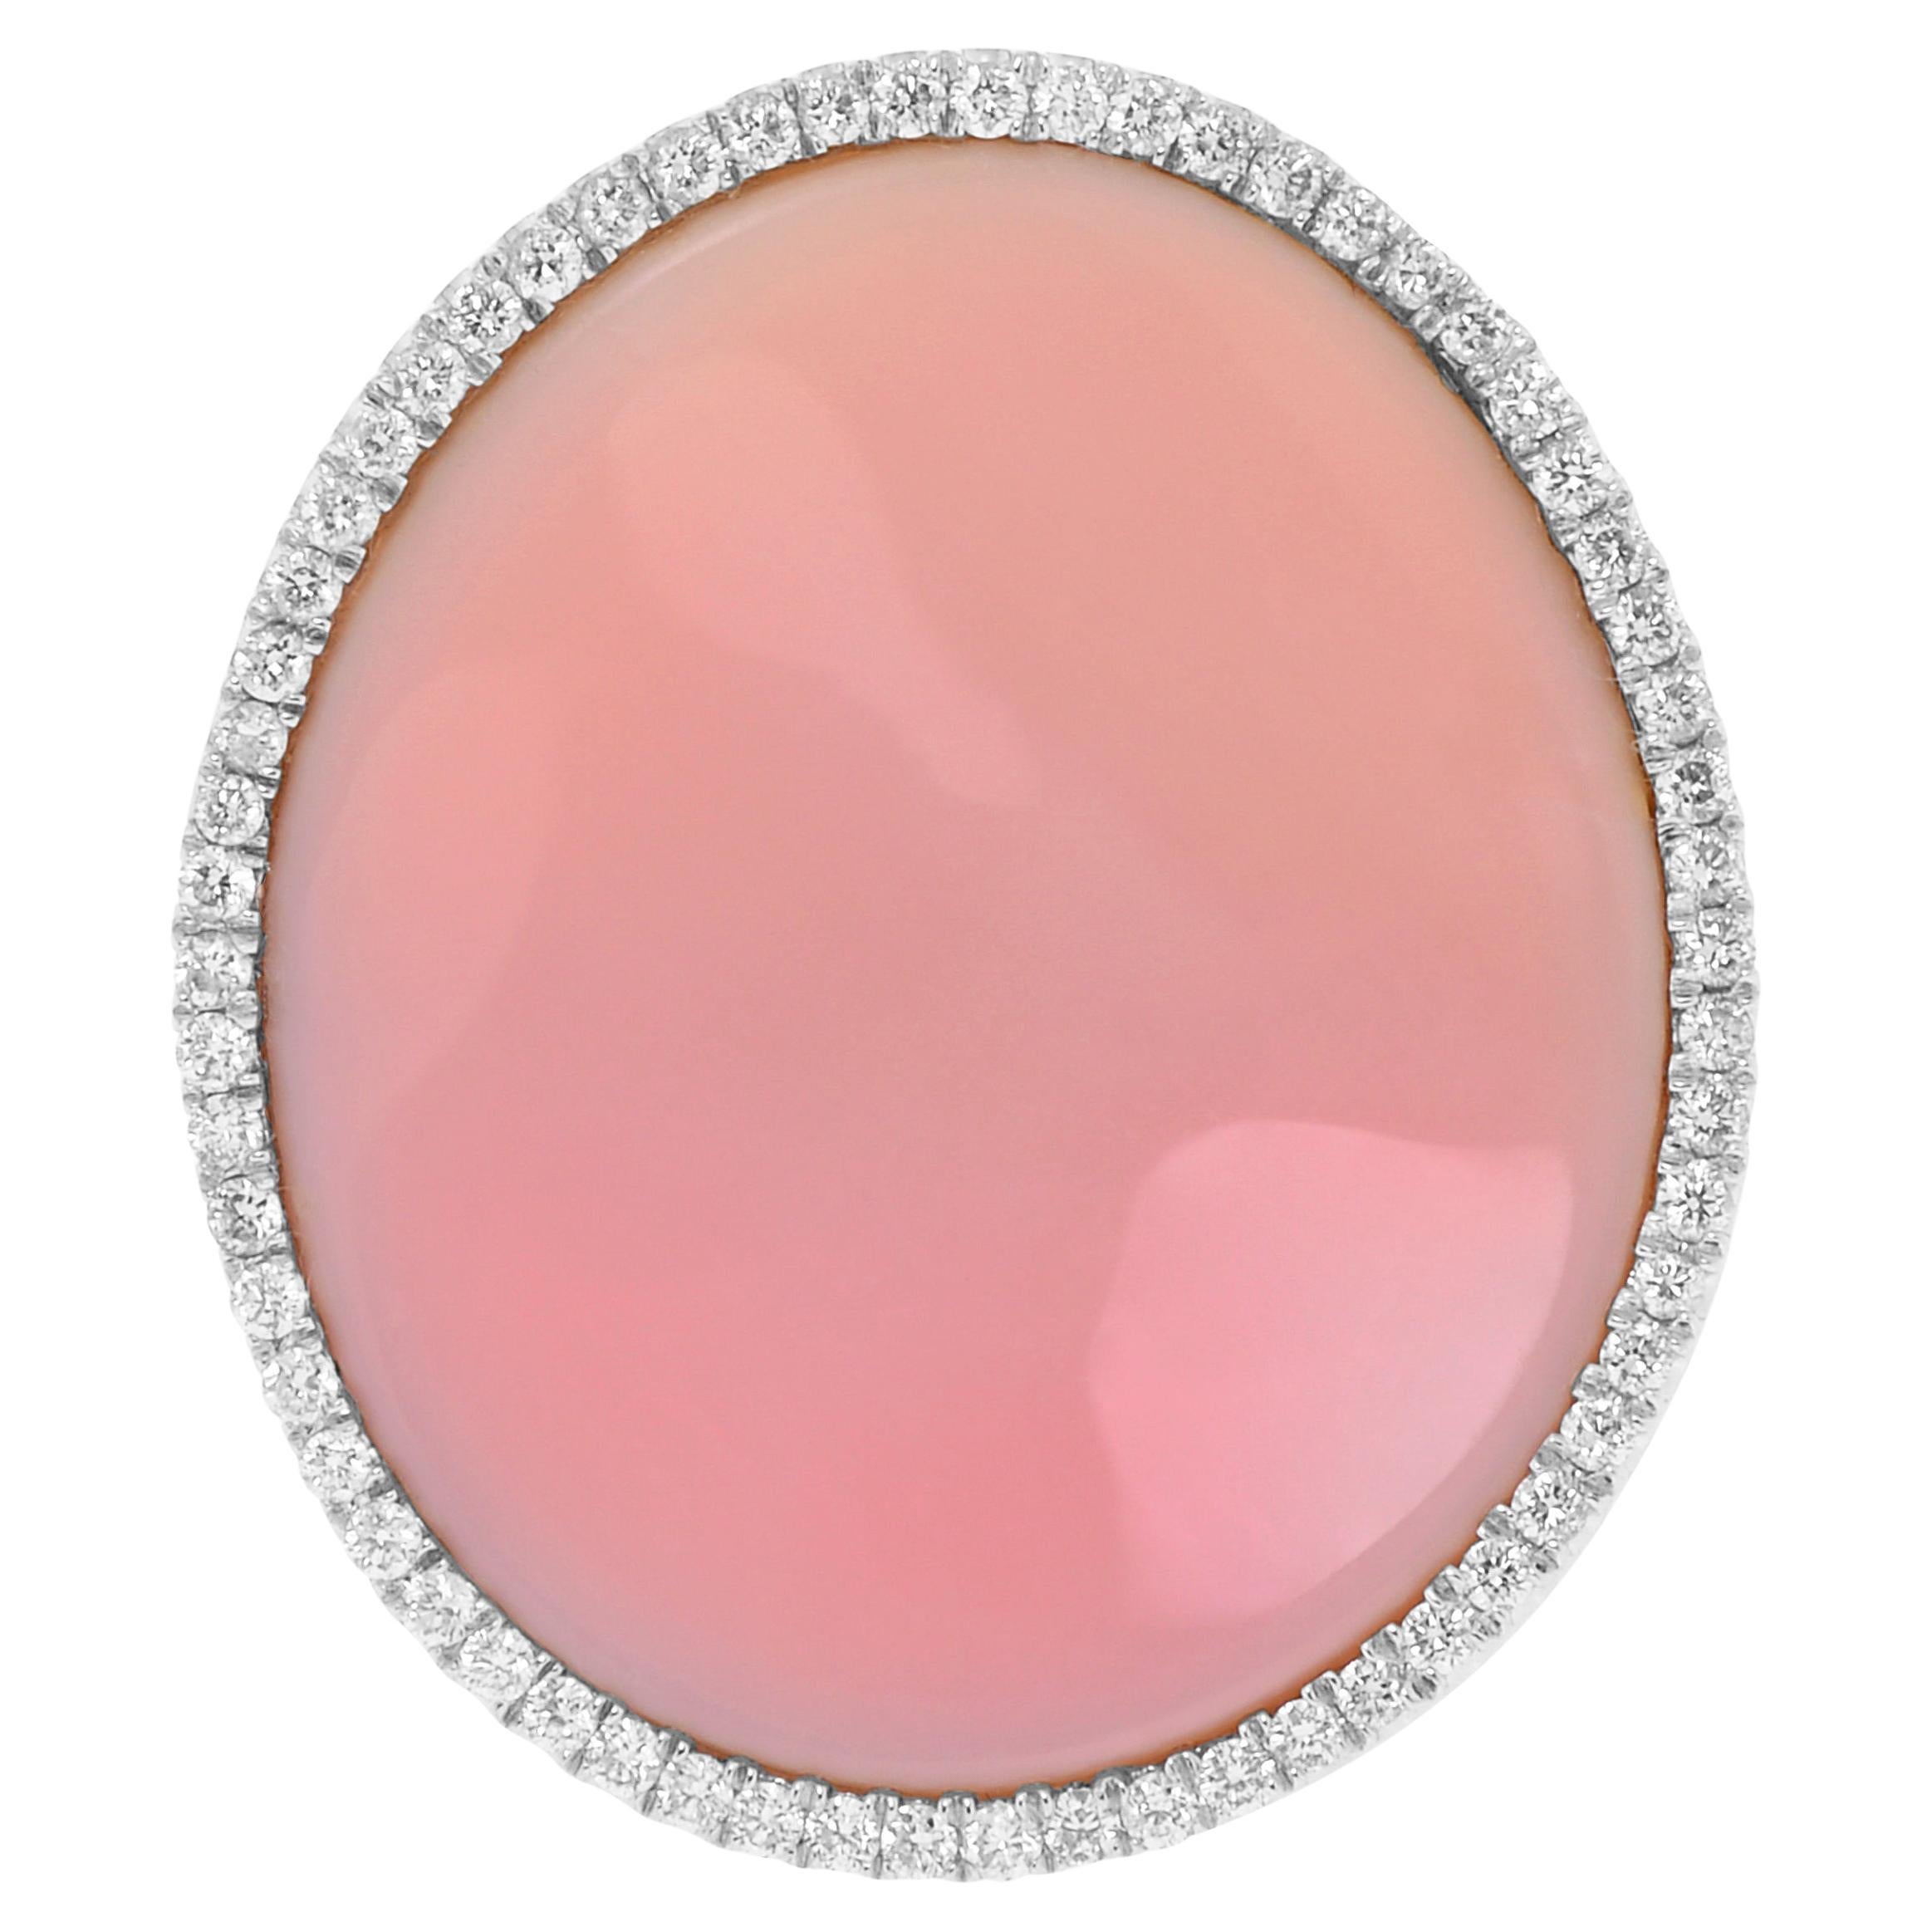 Mimi Milano Aurora 18K White Gold, MoPl, Diamond Statement Ring sz 6.25 For Sale